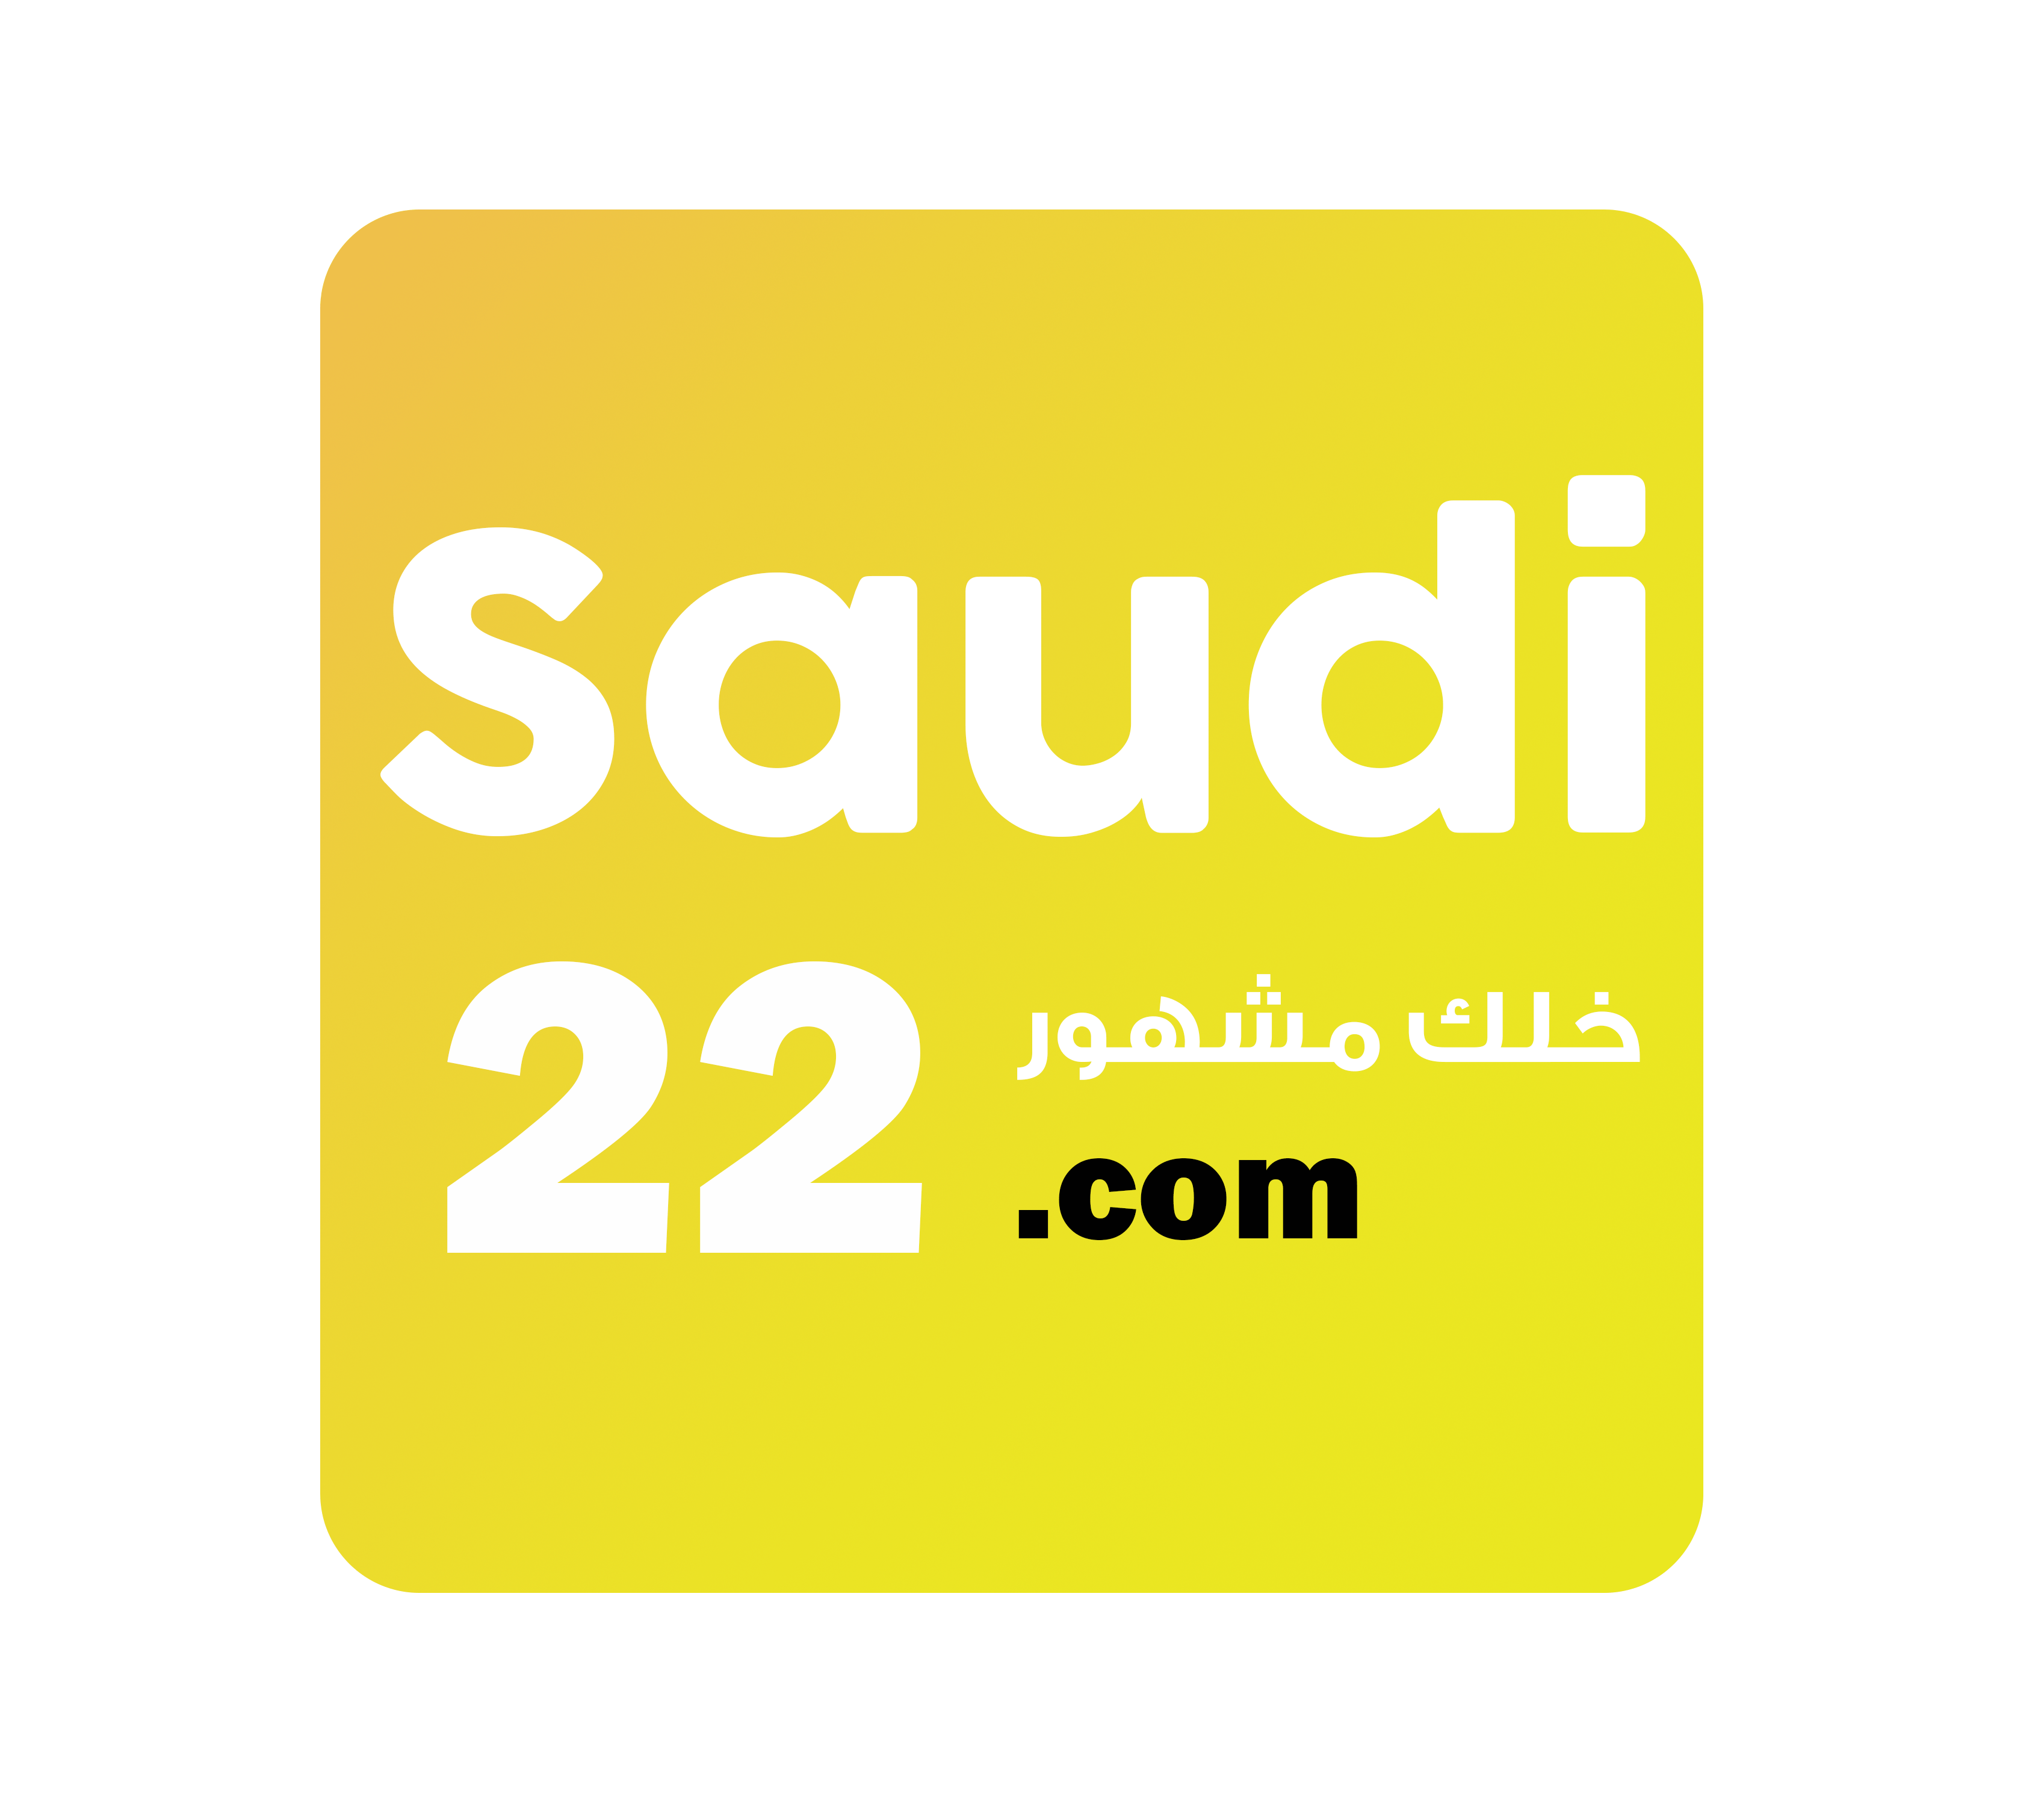 Saudi22 - متجر بيع متابعين